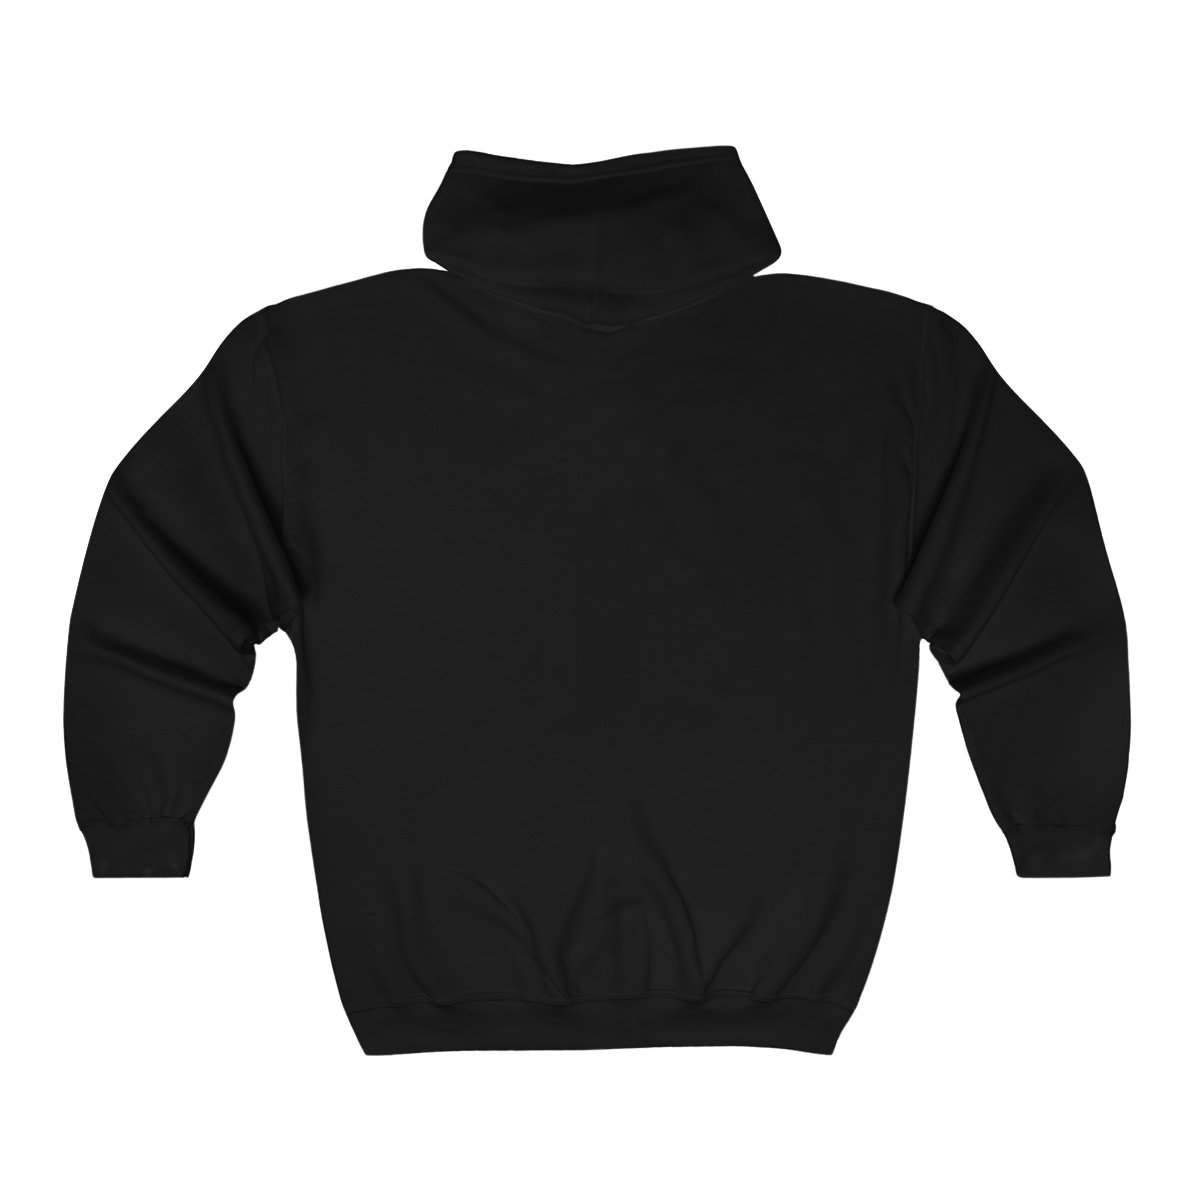 Sanctuary International – Fight The Battle Full Zip Hooded Sweatshirt